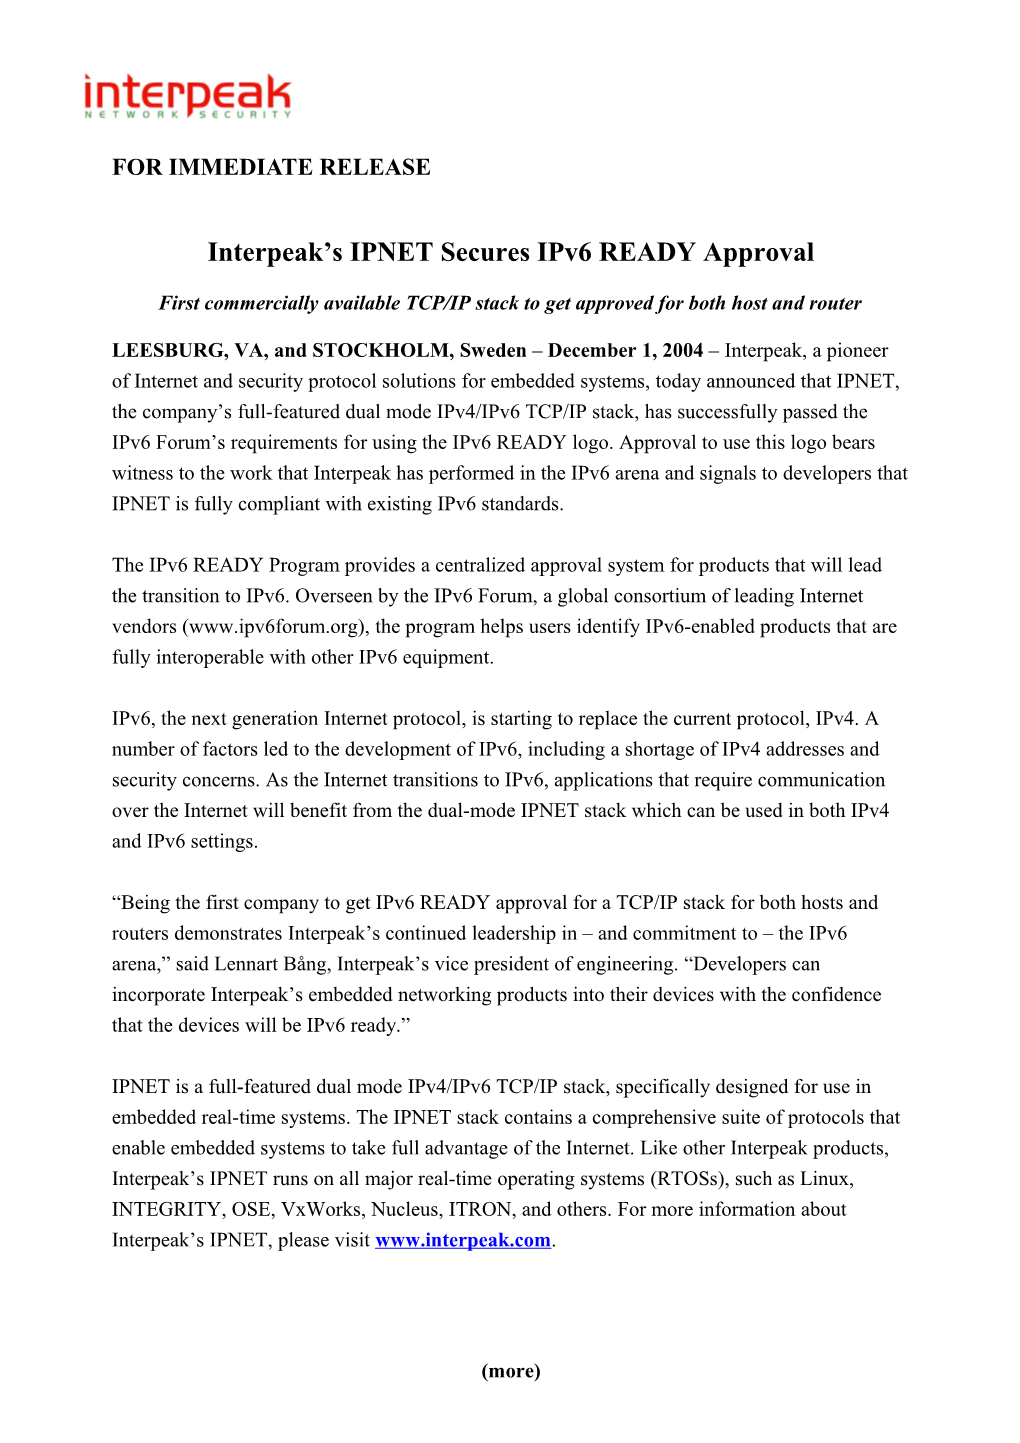 Interpeak S IPNET Secures Ipv6 Ready Logo Page 2